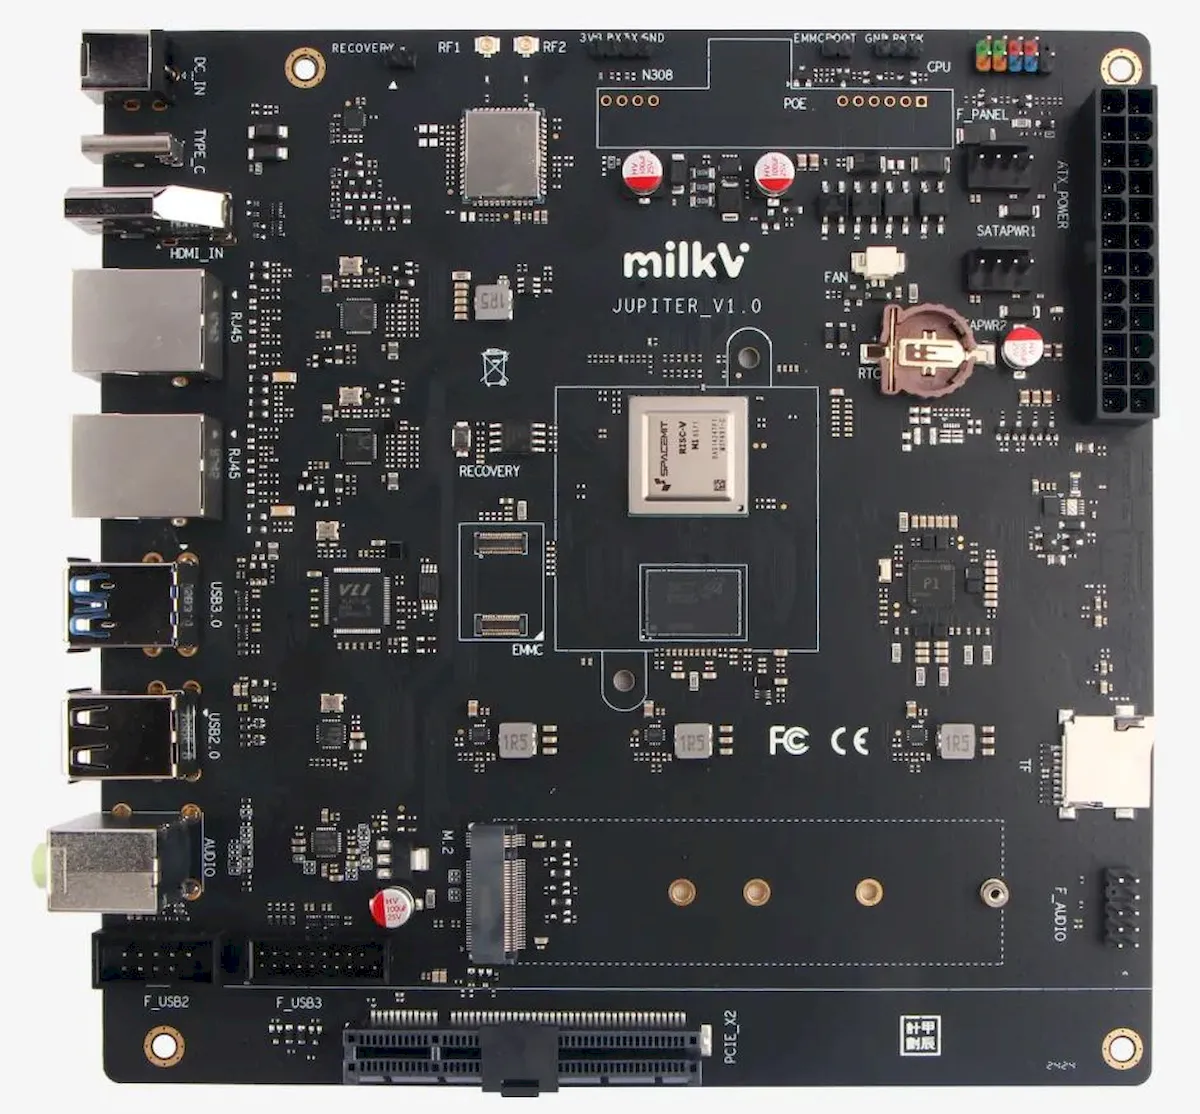 Milk-V Jupiter, uma placa mini ITX com chip RISC-V SpacemiT K1/M1